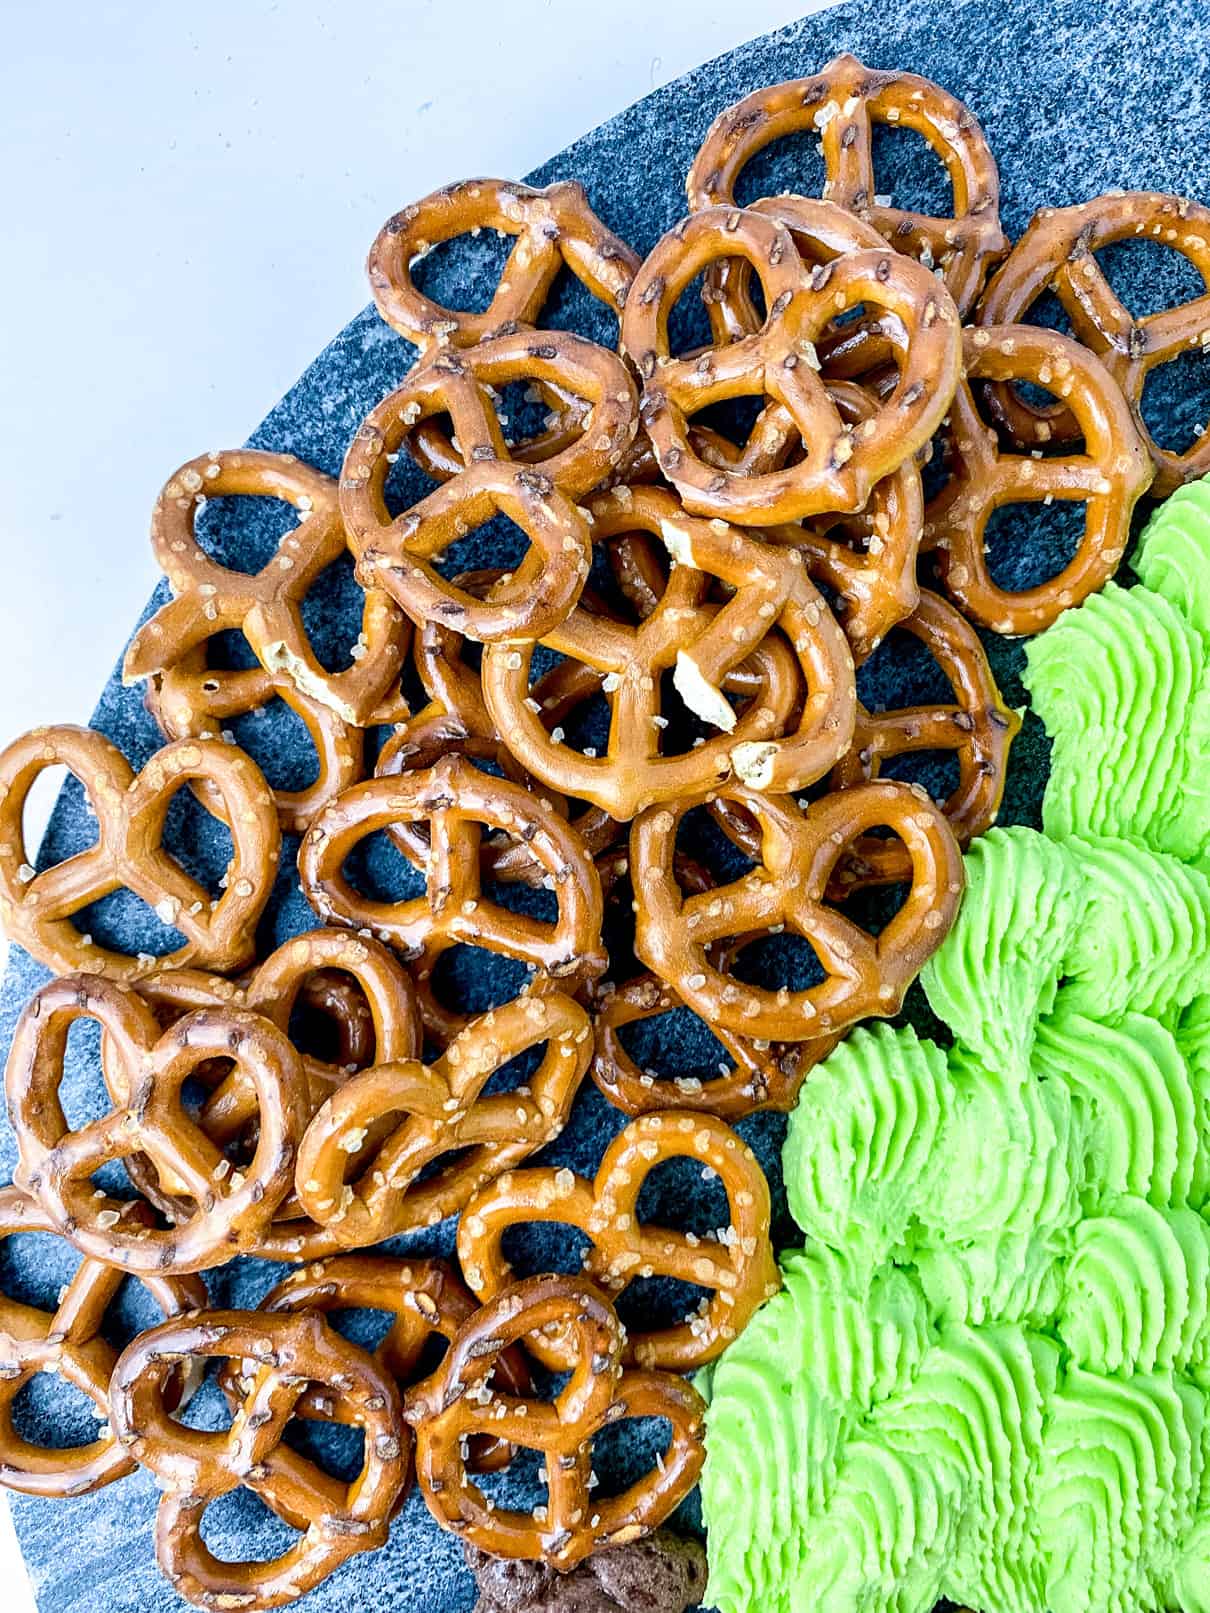 Bird’s eye view of hard pretzels, next to green icing